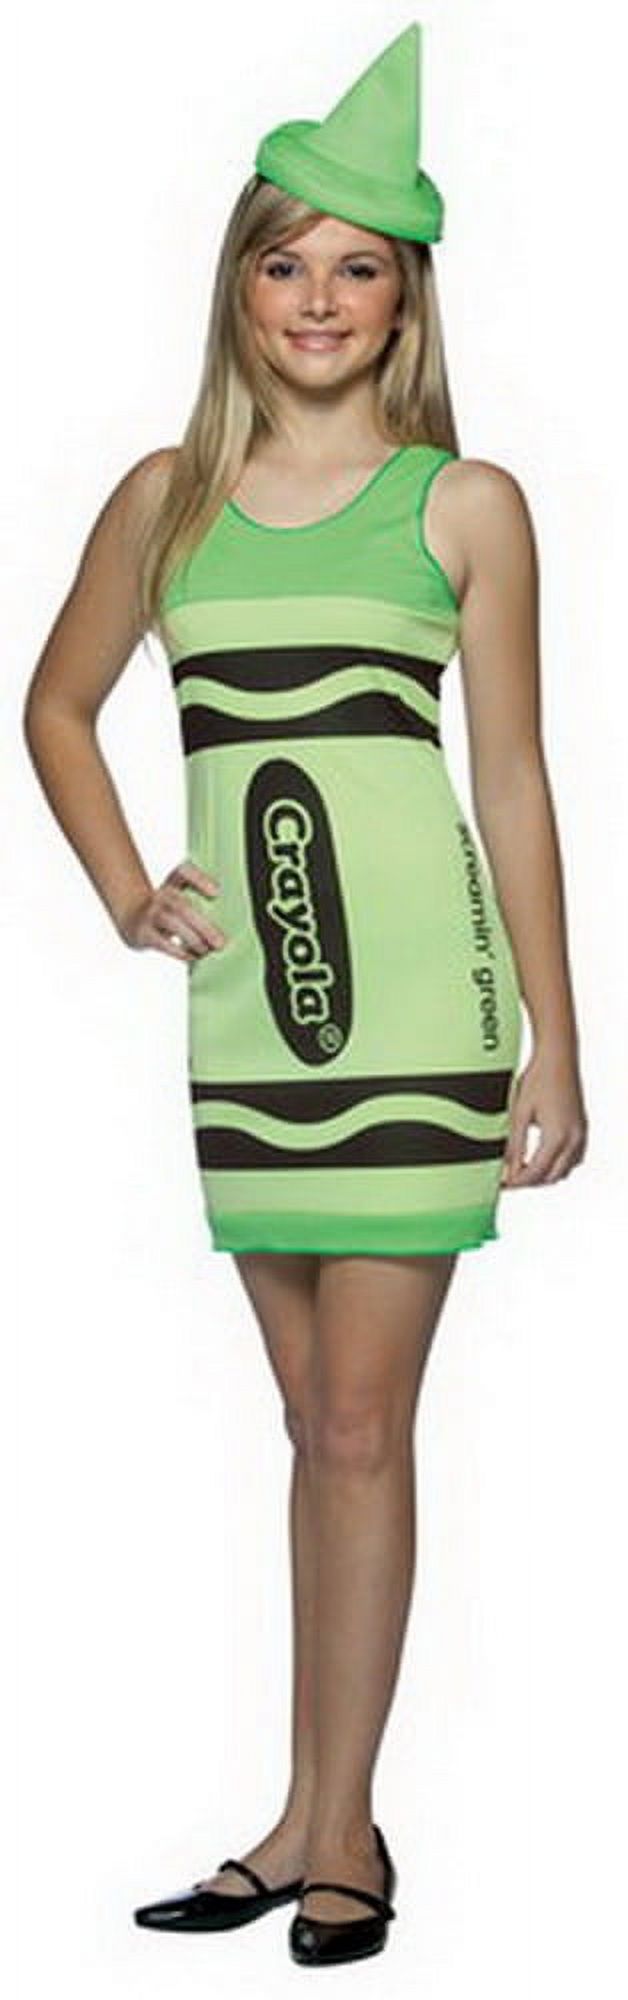 Crayola Screamin' Green Tank Dress Teen Costume by Rasta Imposta 4512-04 - image 1 of 2